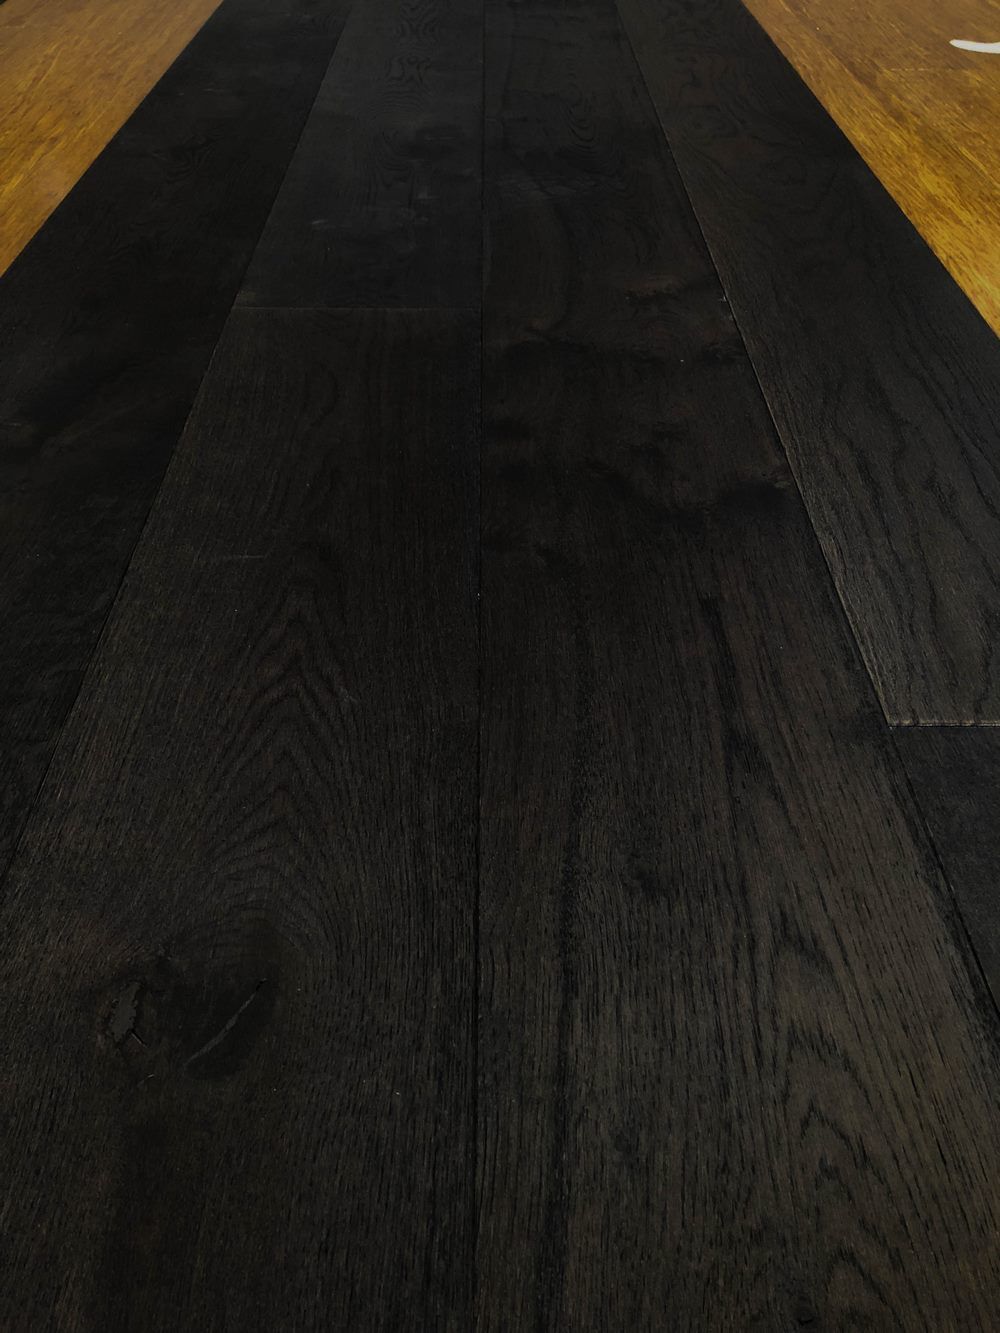 Black Oak Engineered Timber Flooring Imperialoak Lion King Flooring